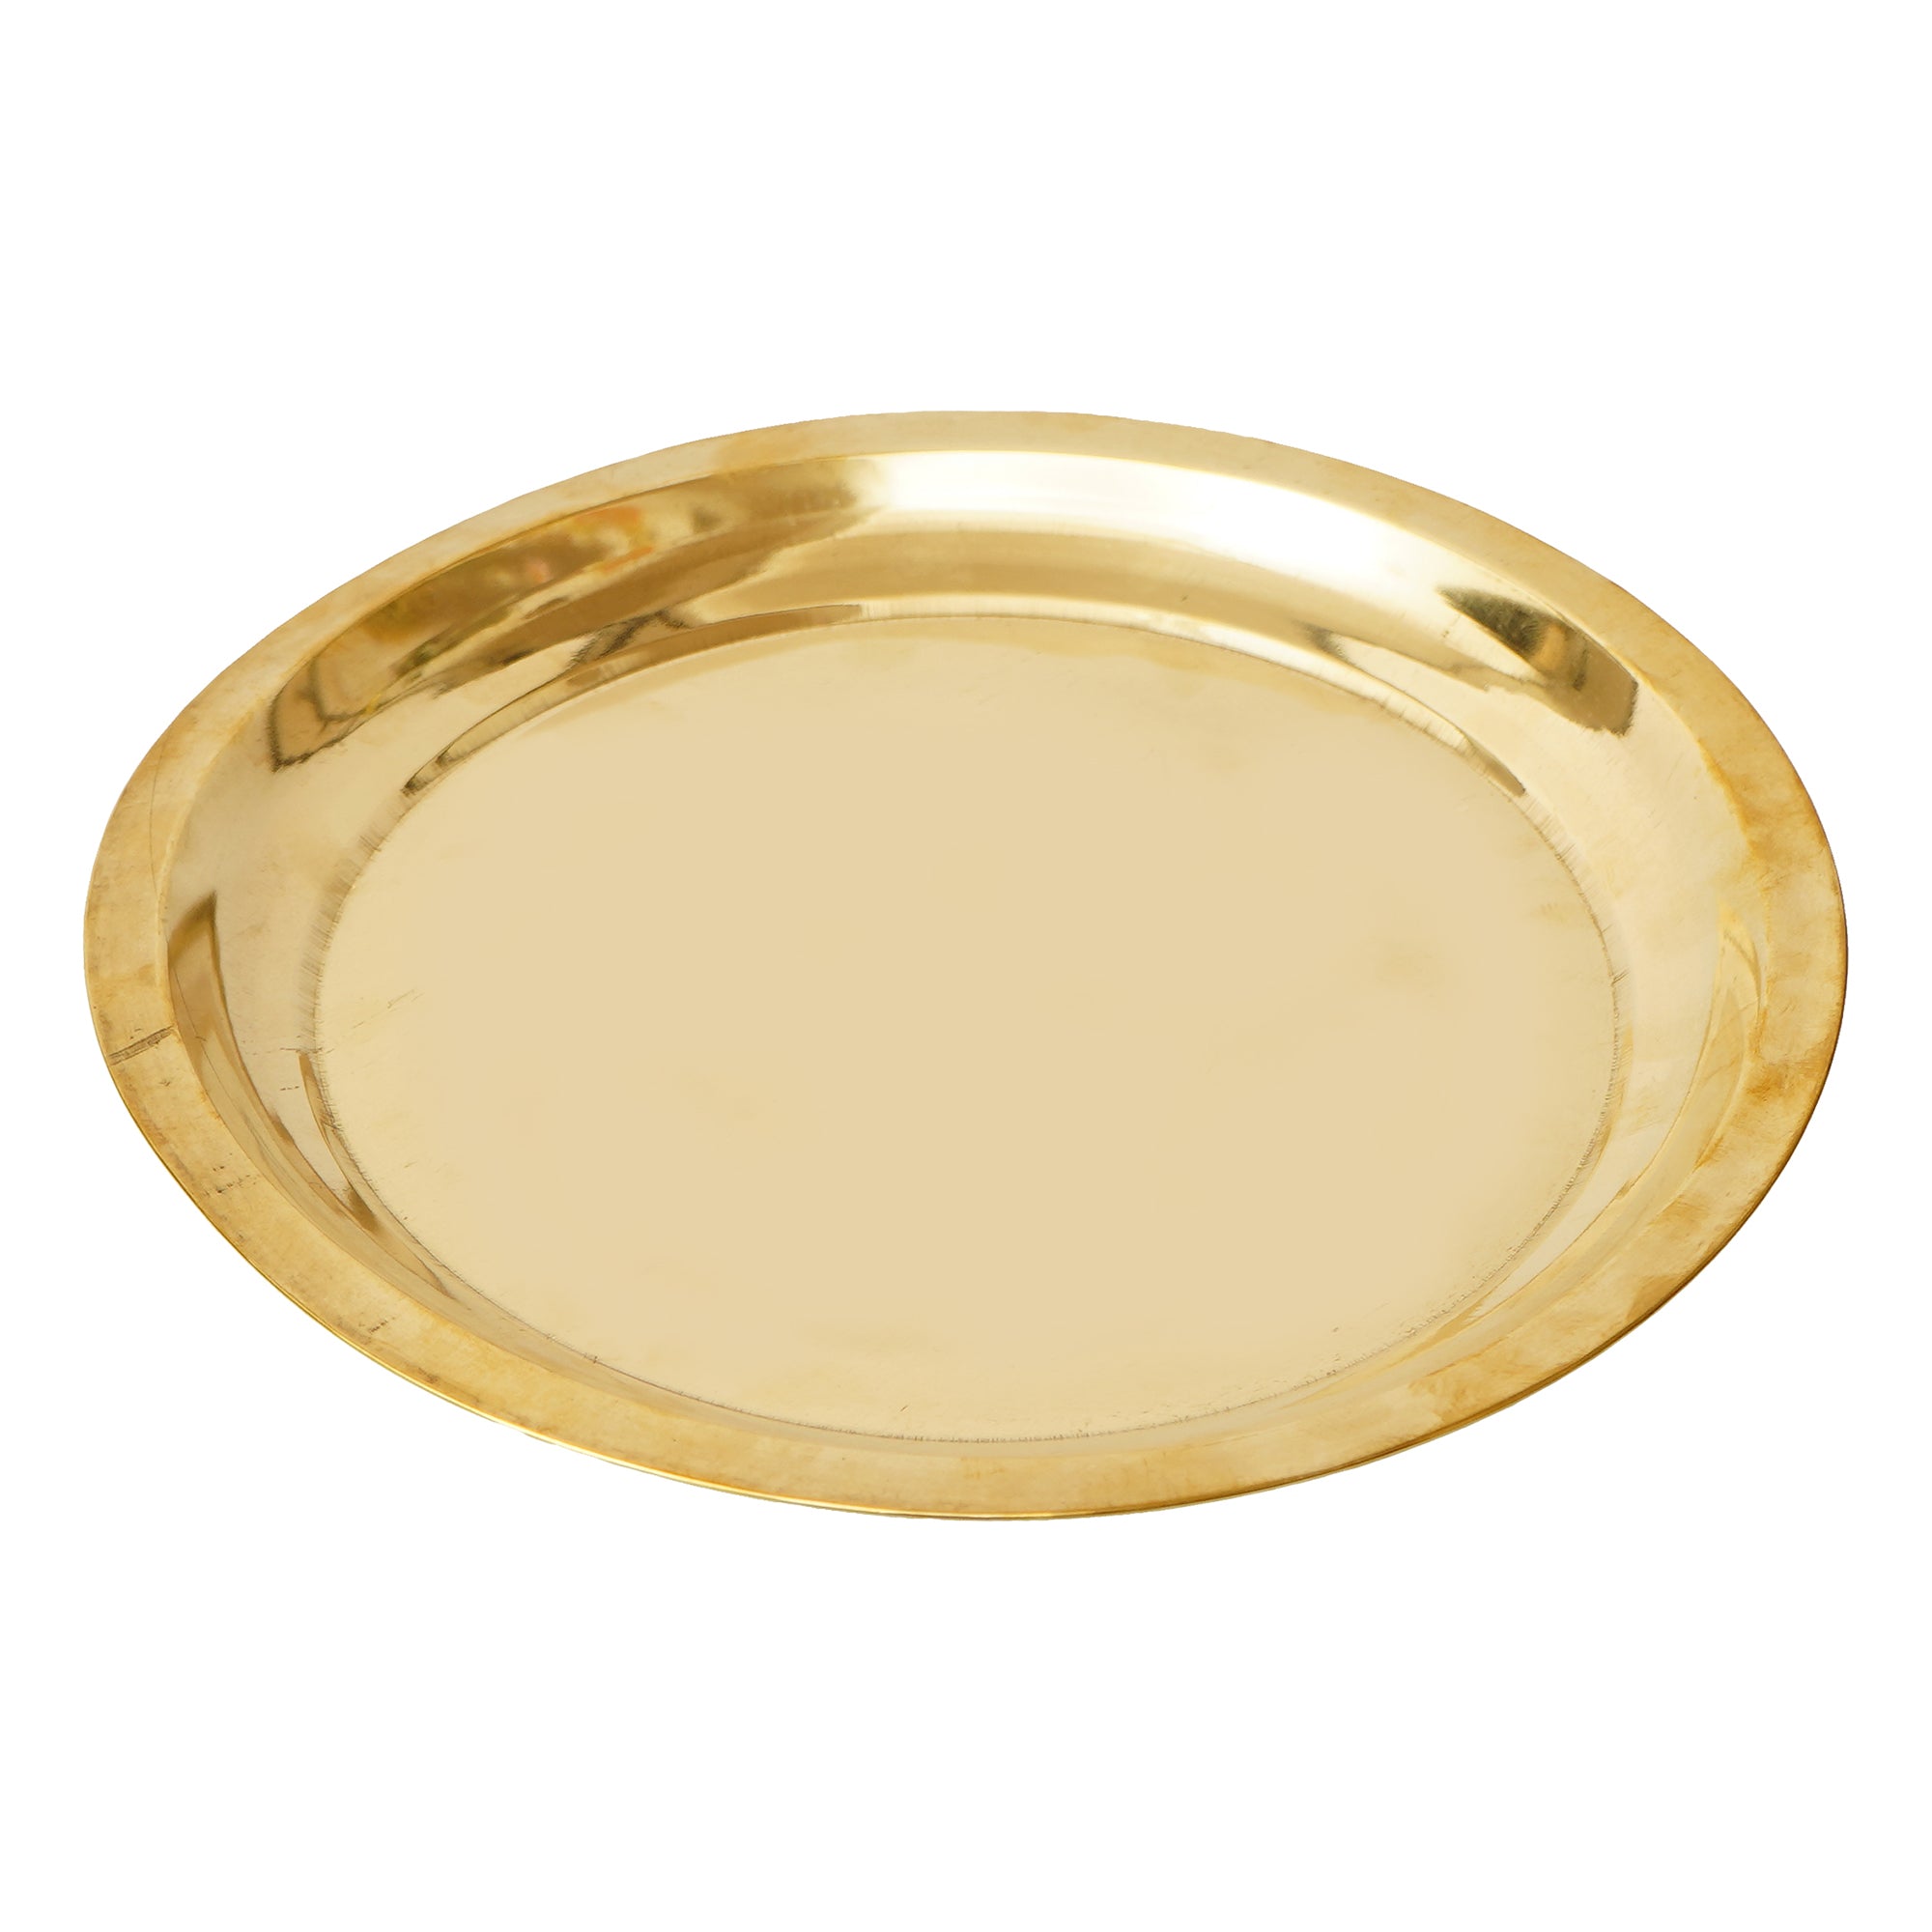 Golden Brass Pooja Thali with 2 Katori/Bowls, 1 Spoon and 1 Glass 6